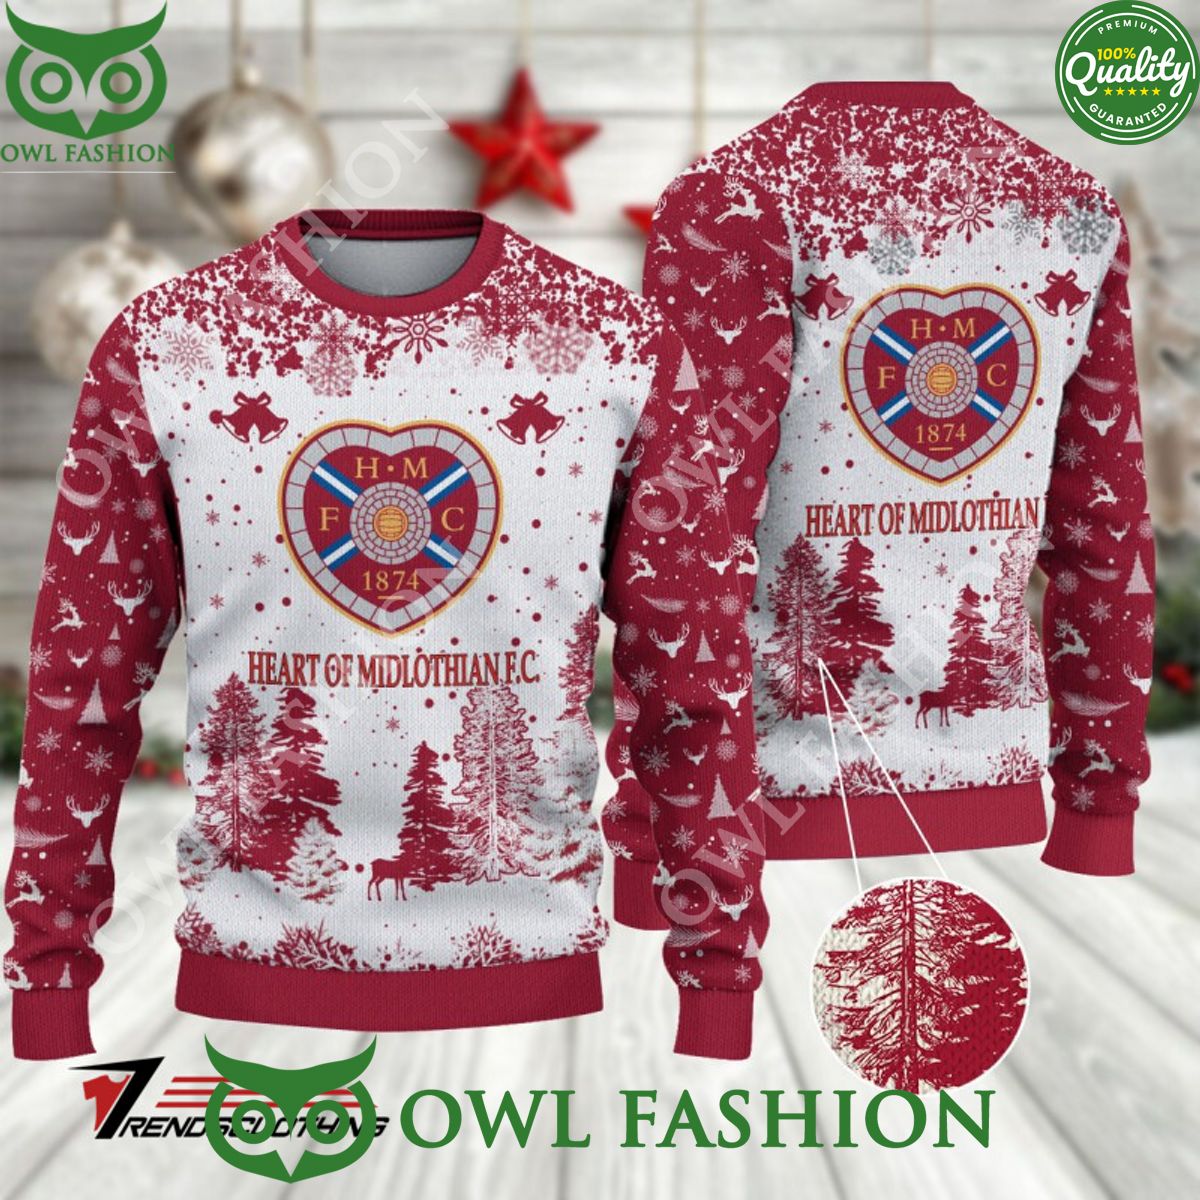 Heart of Midlothian F.C. SPFL Scottish Snow Fall Pine Ugly sweater jumper